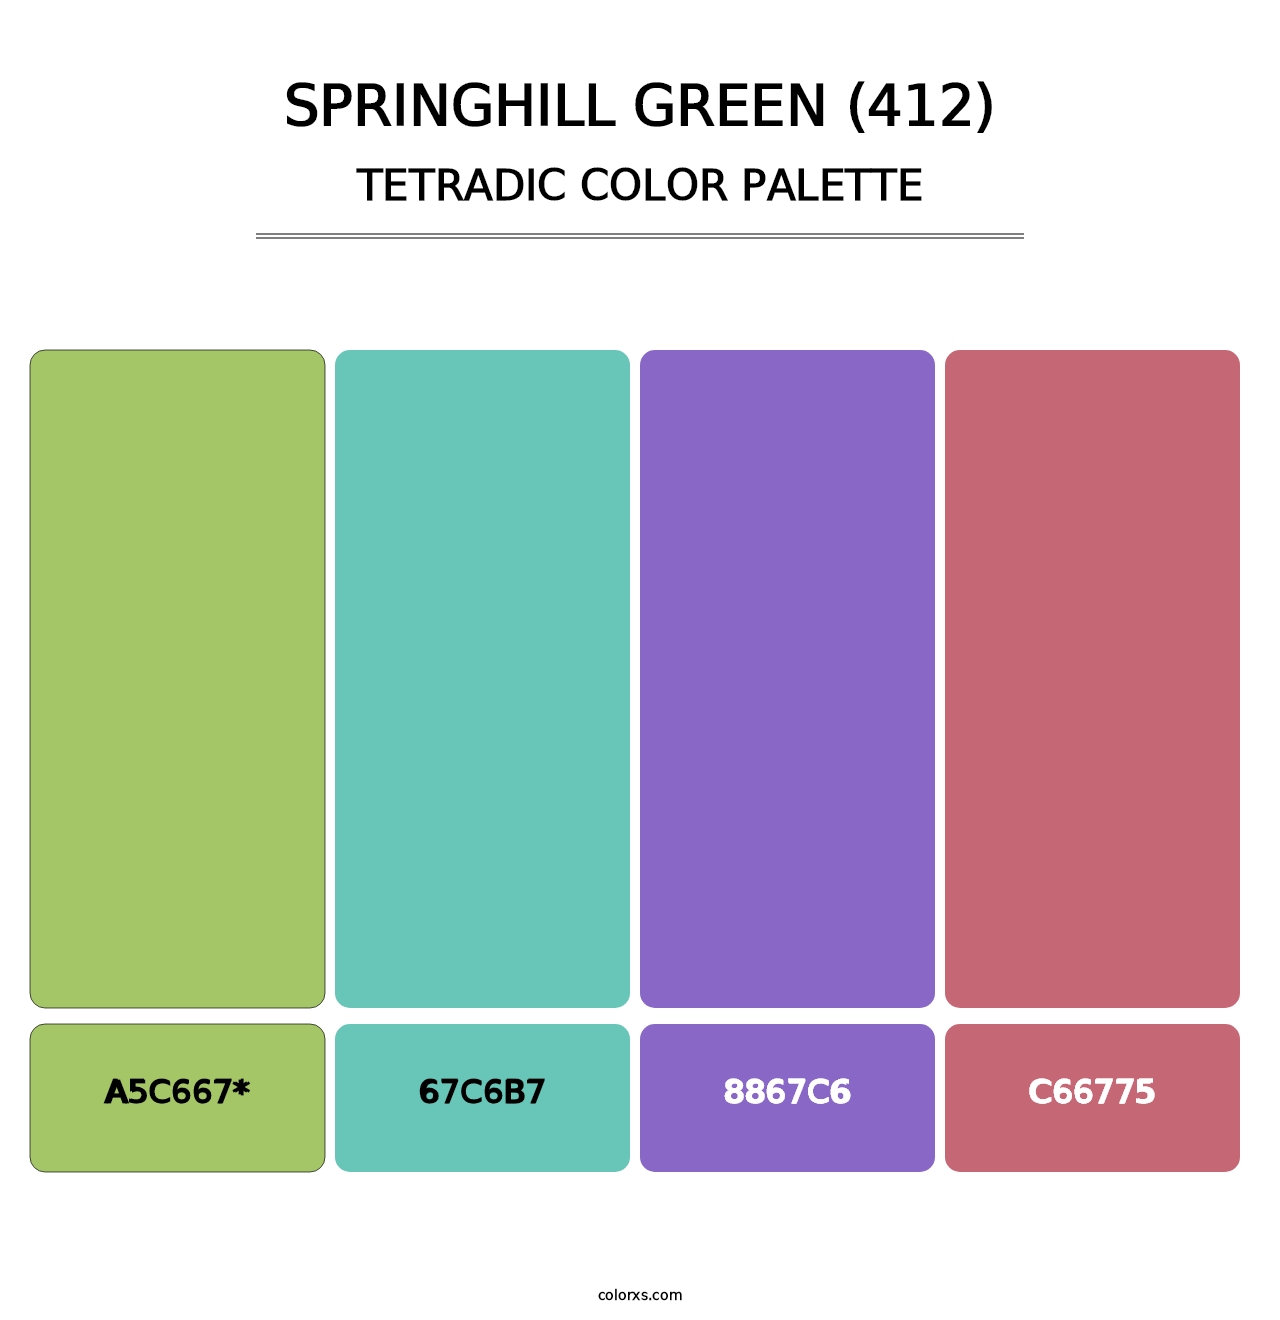 Springhill Green (412) - Tetradic Color Palette